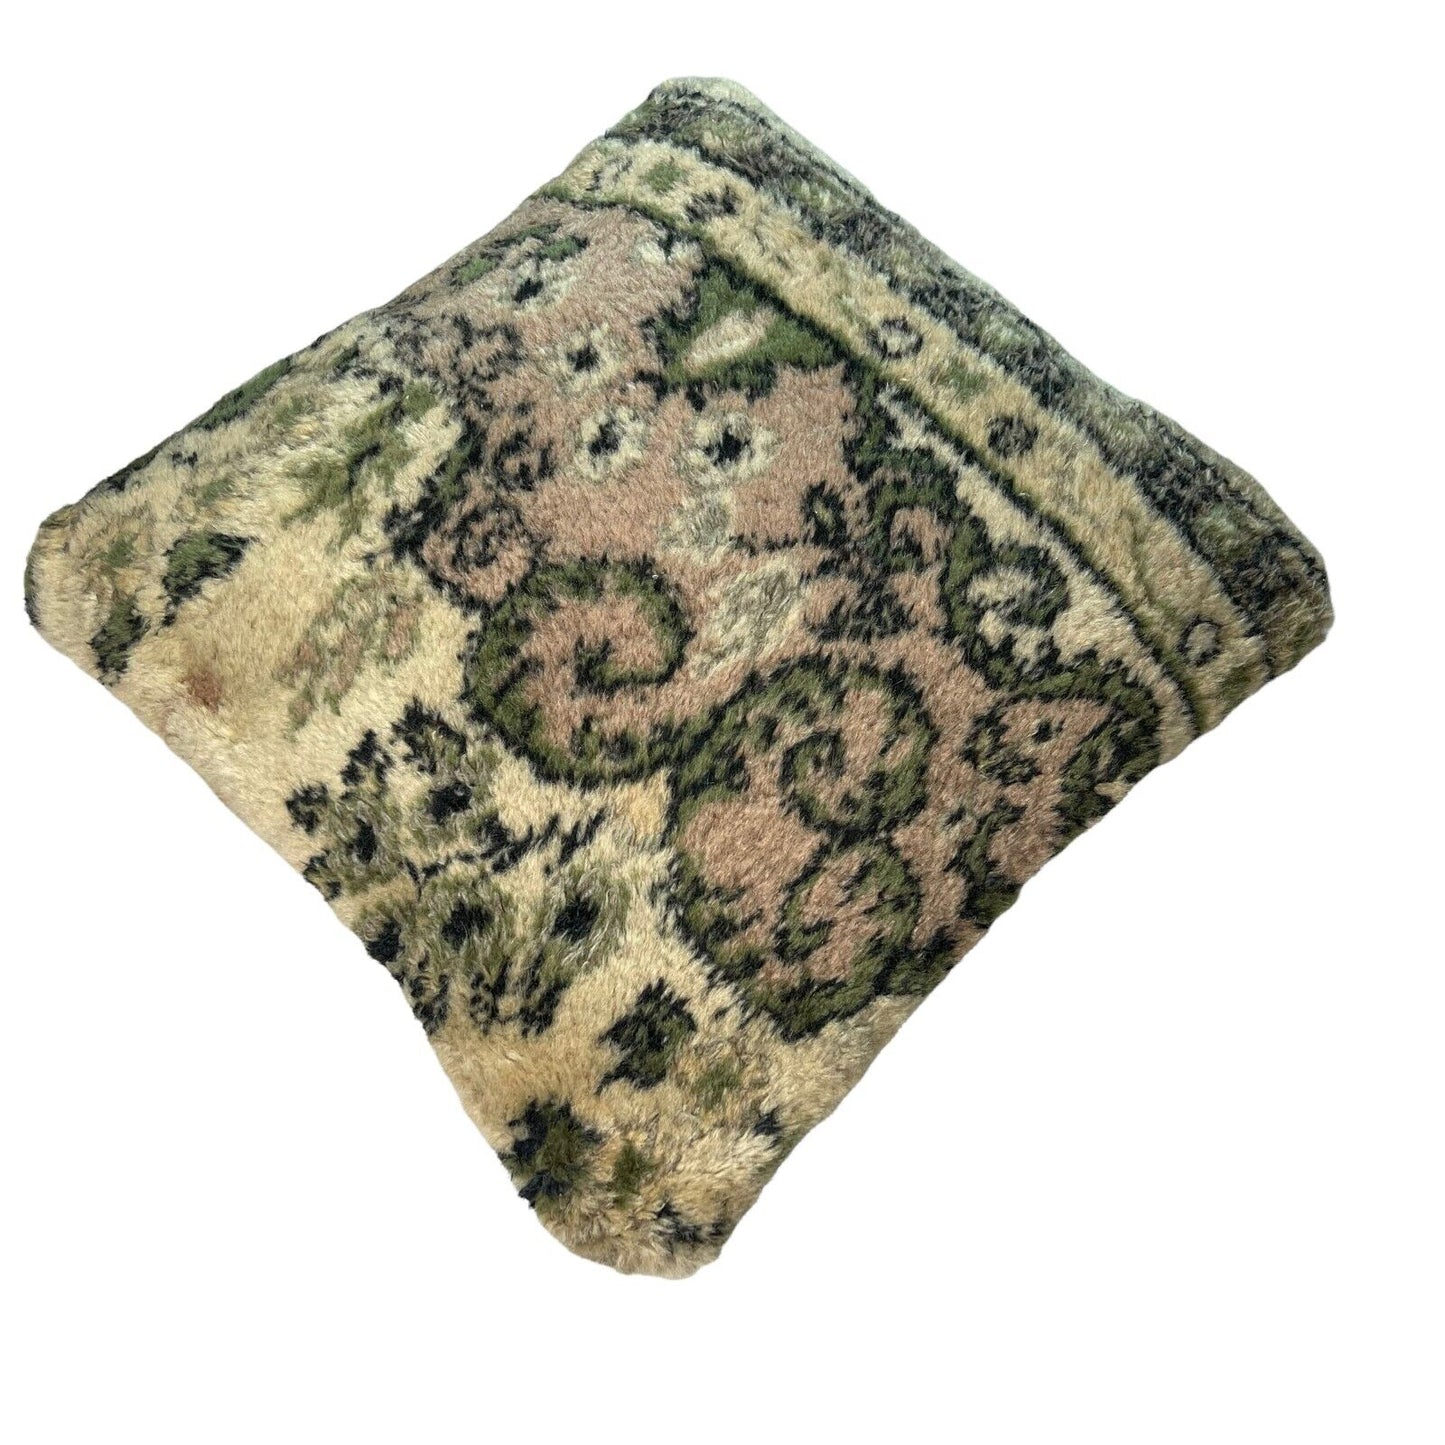 18''X18'' Vintage Handmade Rug Cushion Cover, 45 x 45 cm Deko Kissenbezug